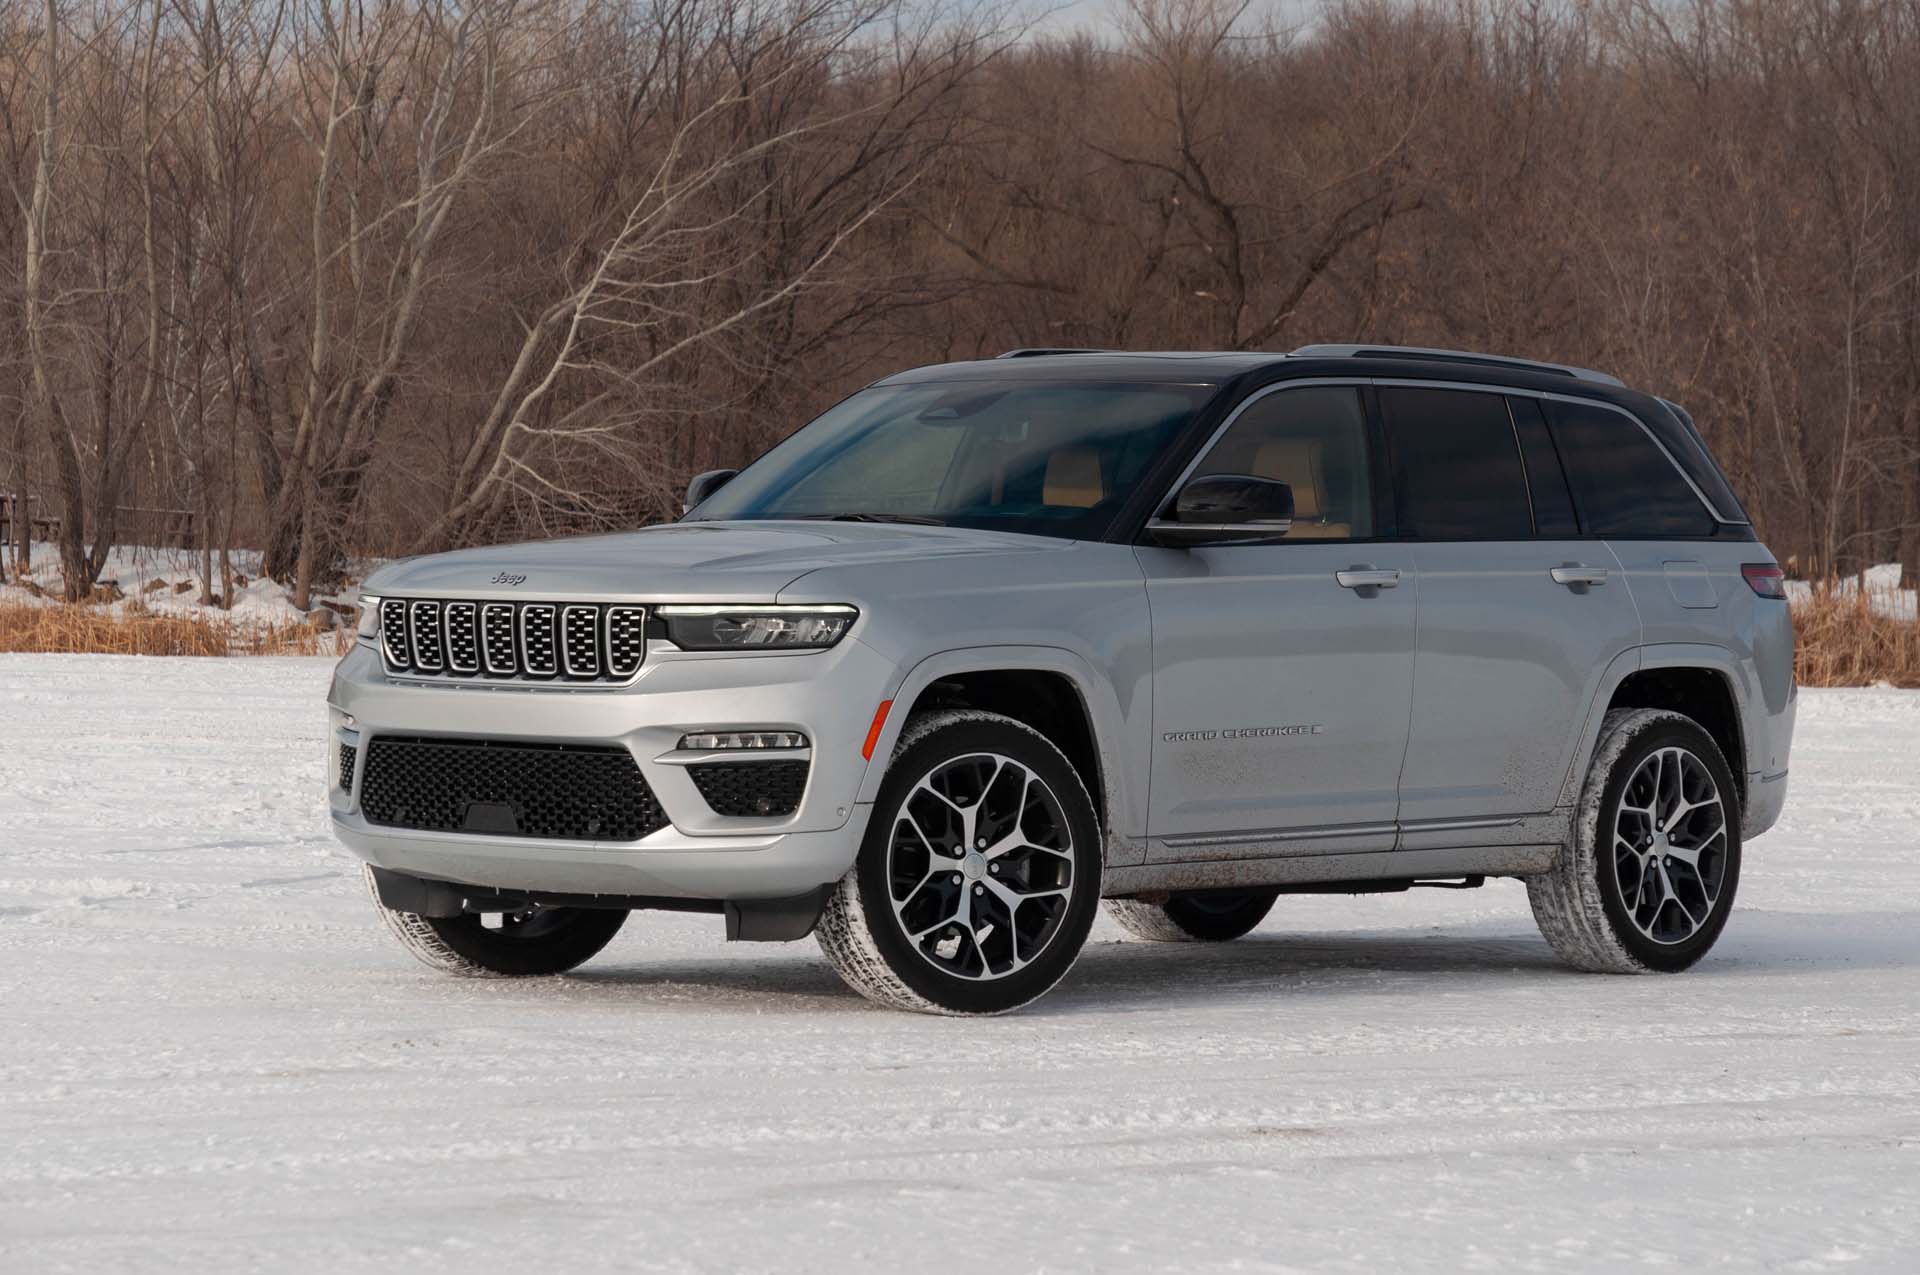 Test drive: 2022 Jeep Grand Cherokee Summit Reserve targets luxury establishment